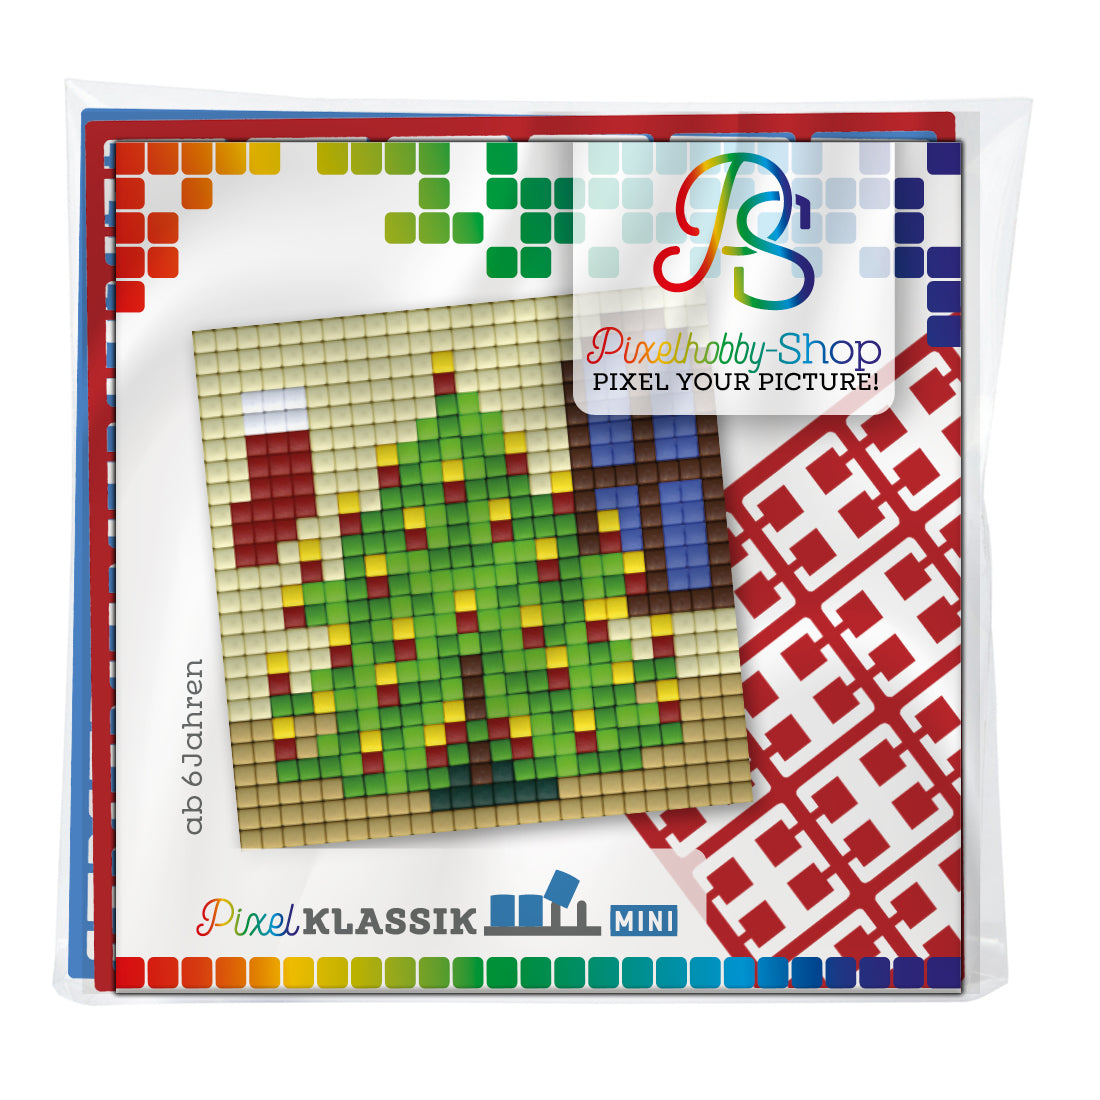 Pixelhobby Klassik (Mini) Magnet Set - Weihnachtsbaum steht